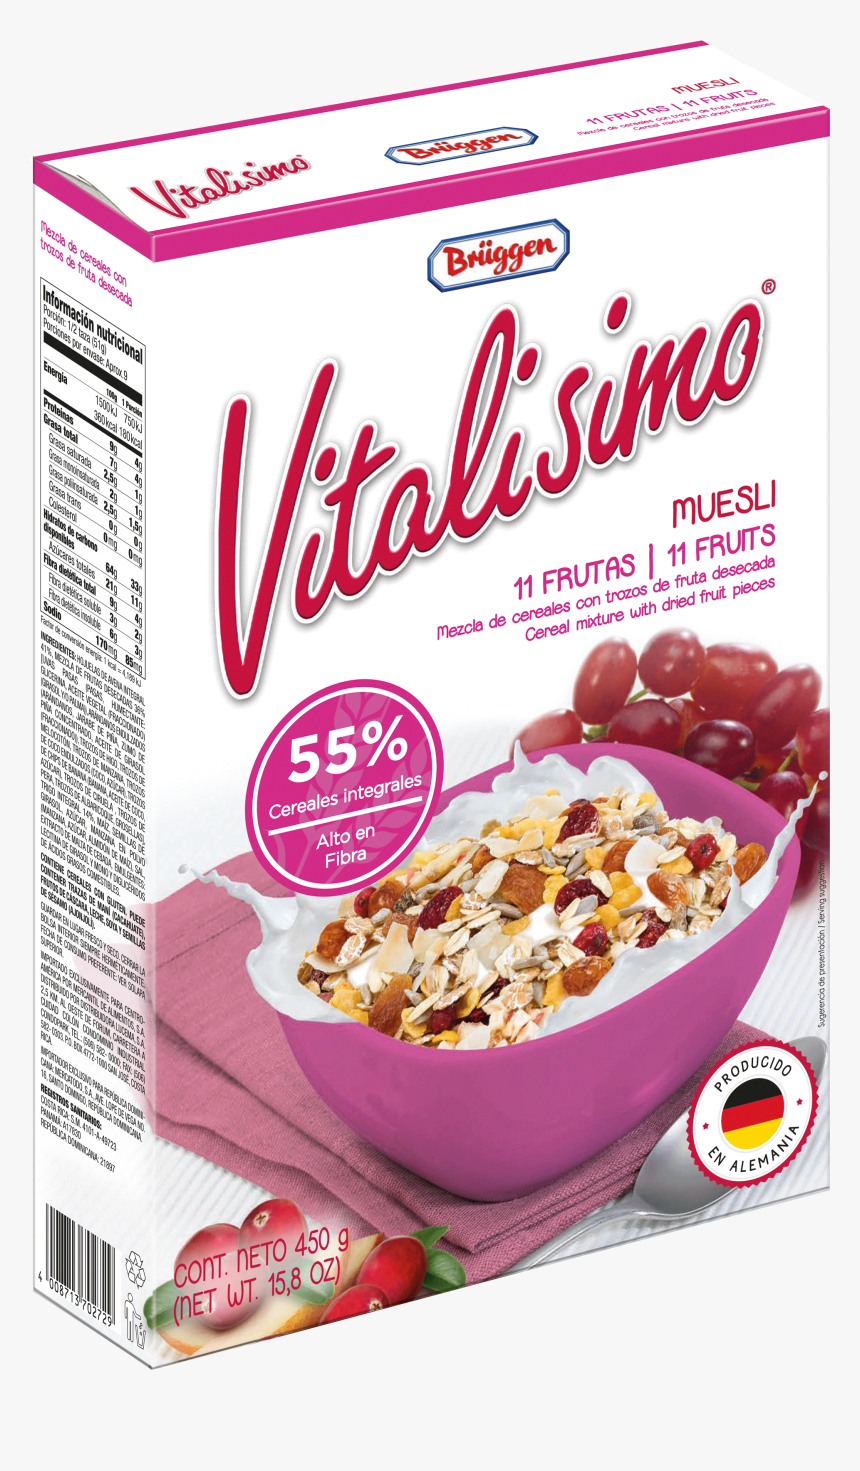 Vitalisimo 10 Fruit Muesli - Vitalisimo, HD Png Download, Free Download